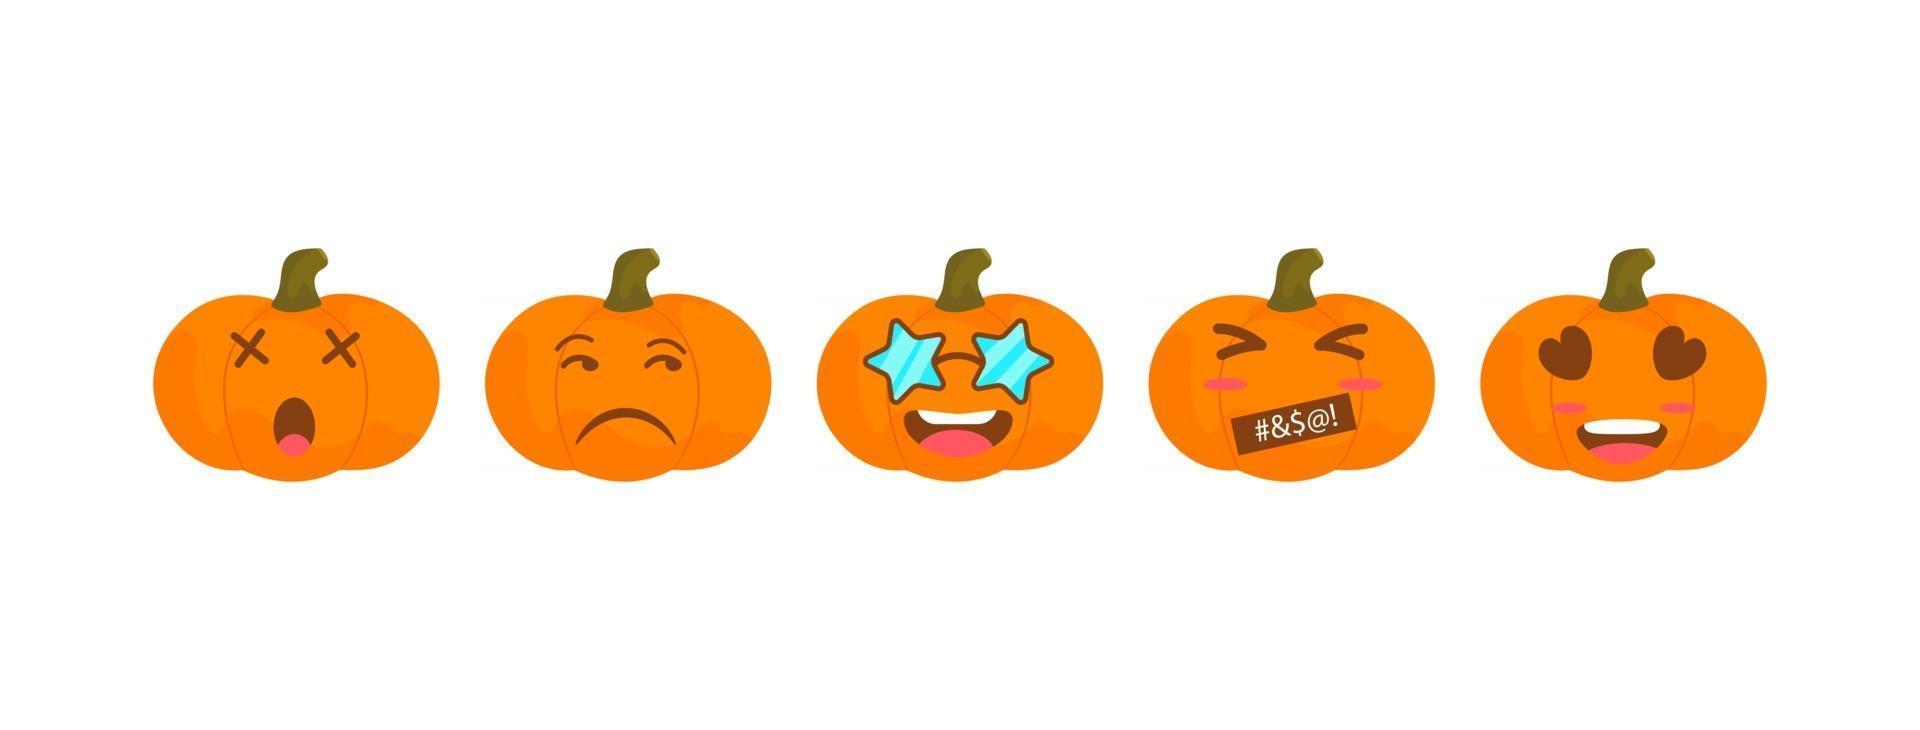 Vector emoji pumpkin halloween collection with different reactions.